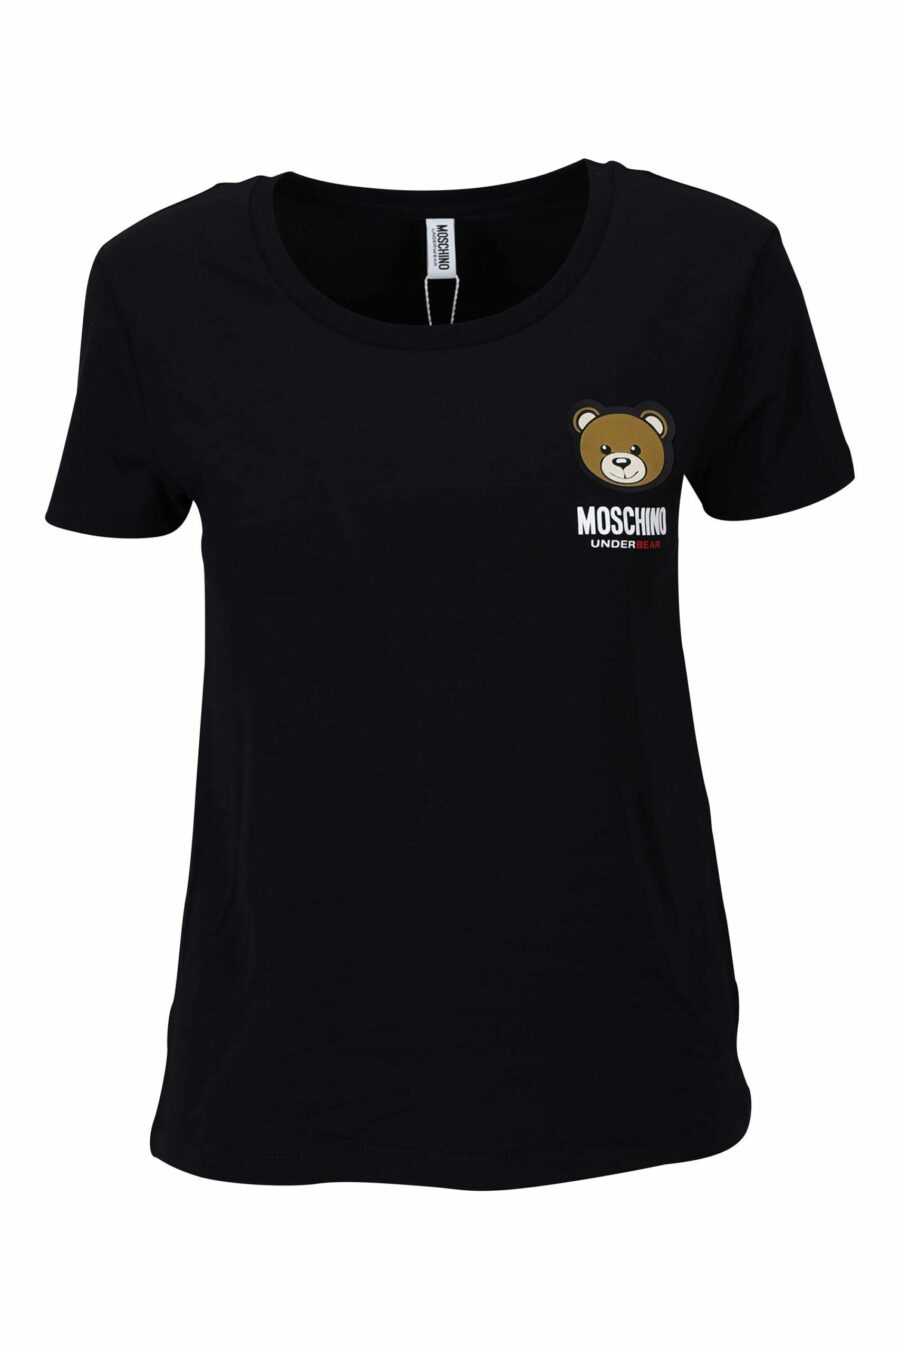 Camiseta negra con logo parche oso "underbear" - 667113034348 scaled